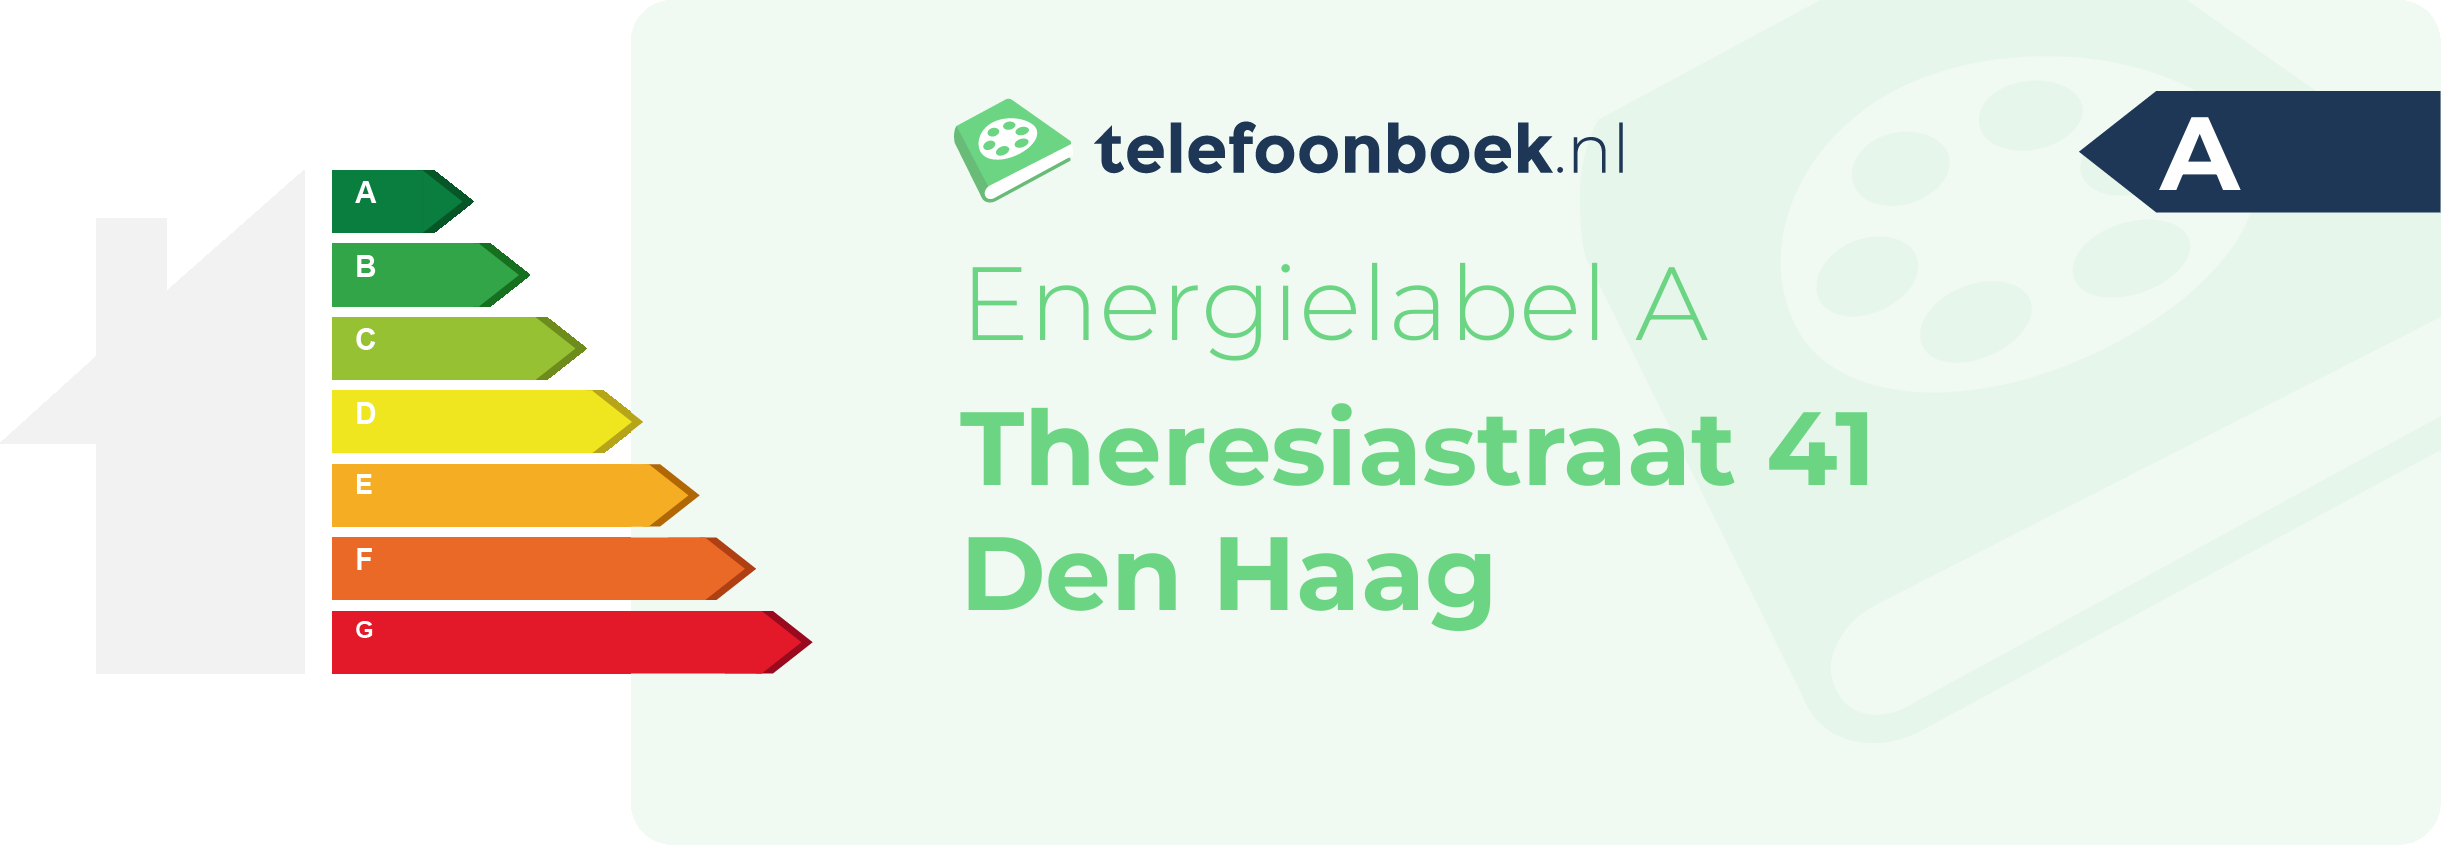 Energielabel Theresiastraat 41 Den Haag